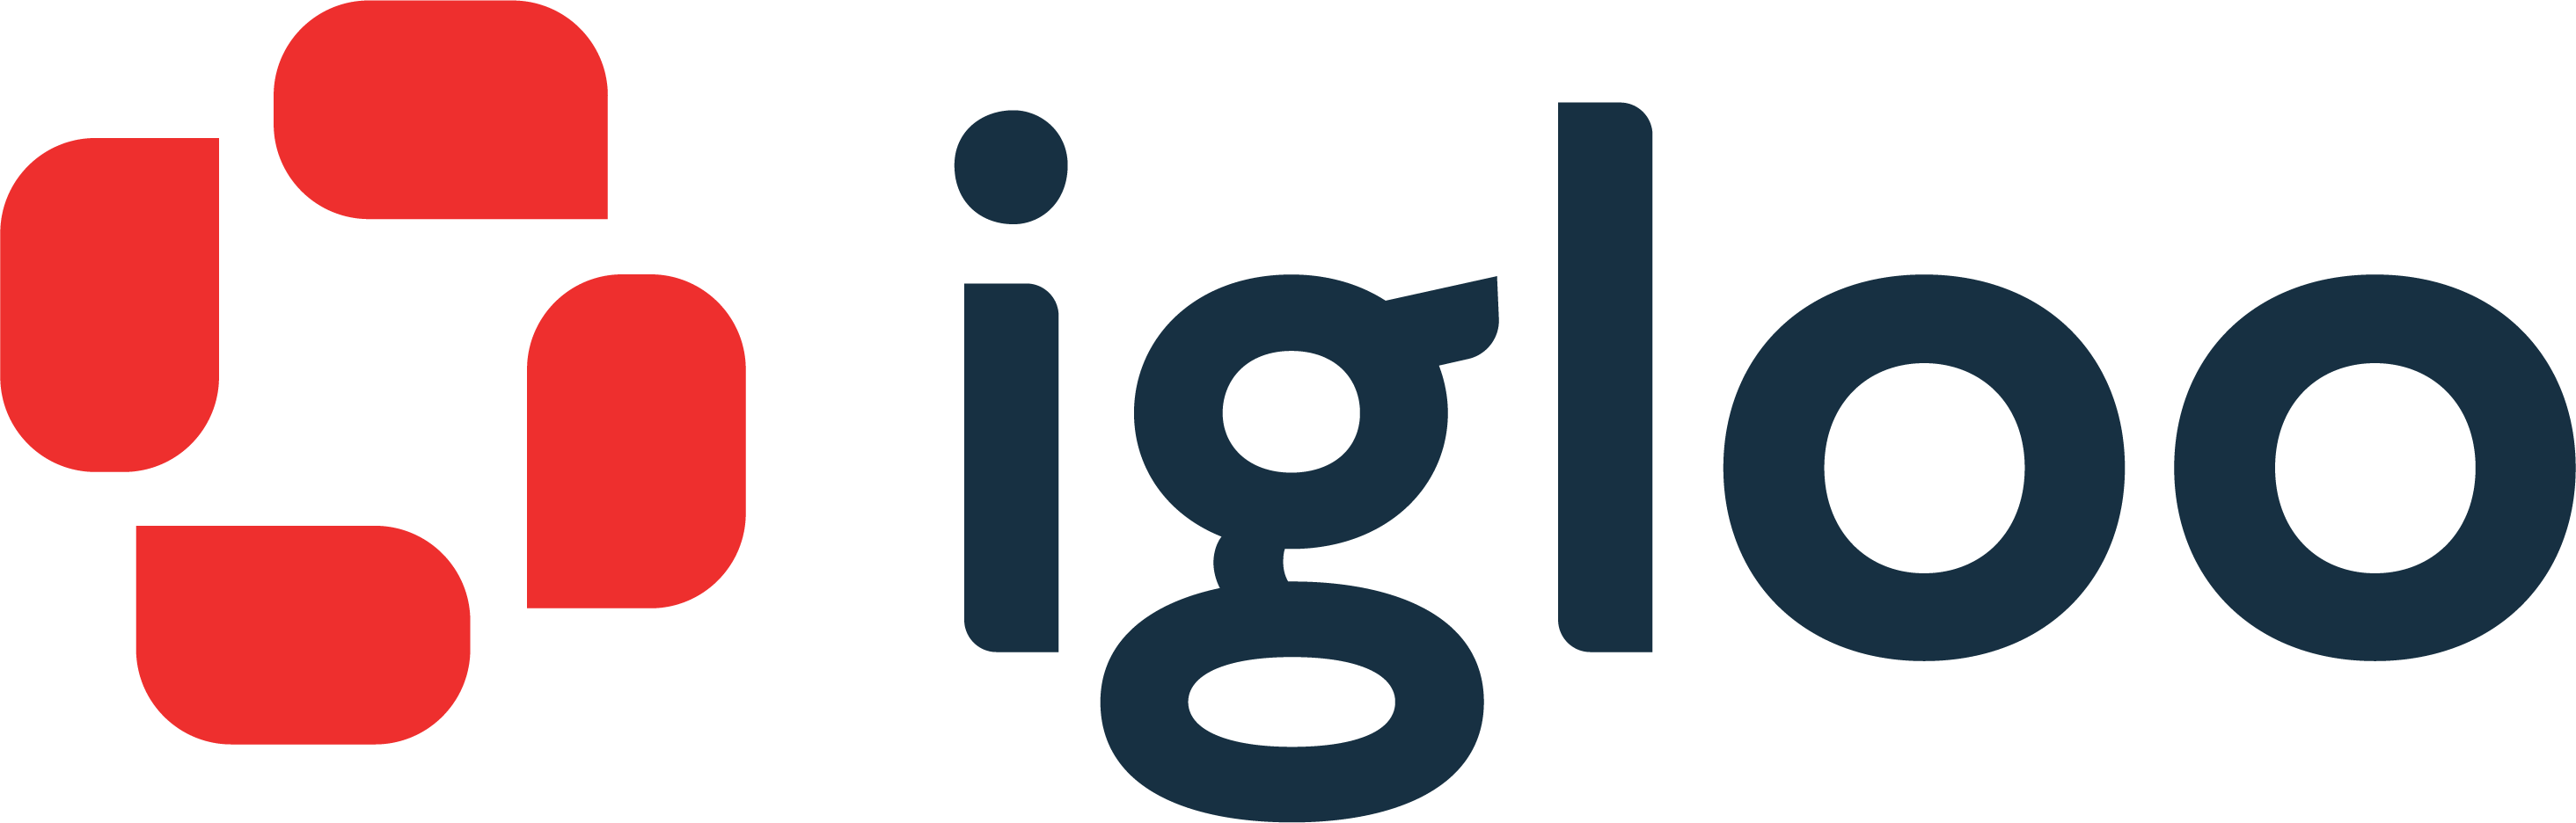 Igloo Logo - CMYK-header1.png